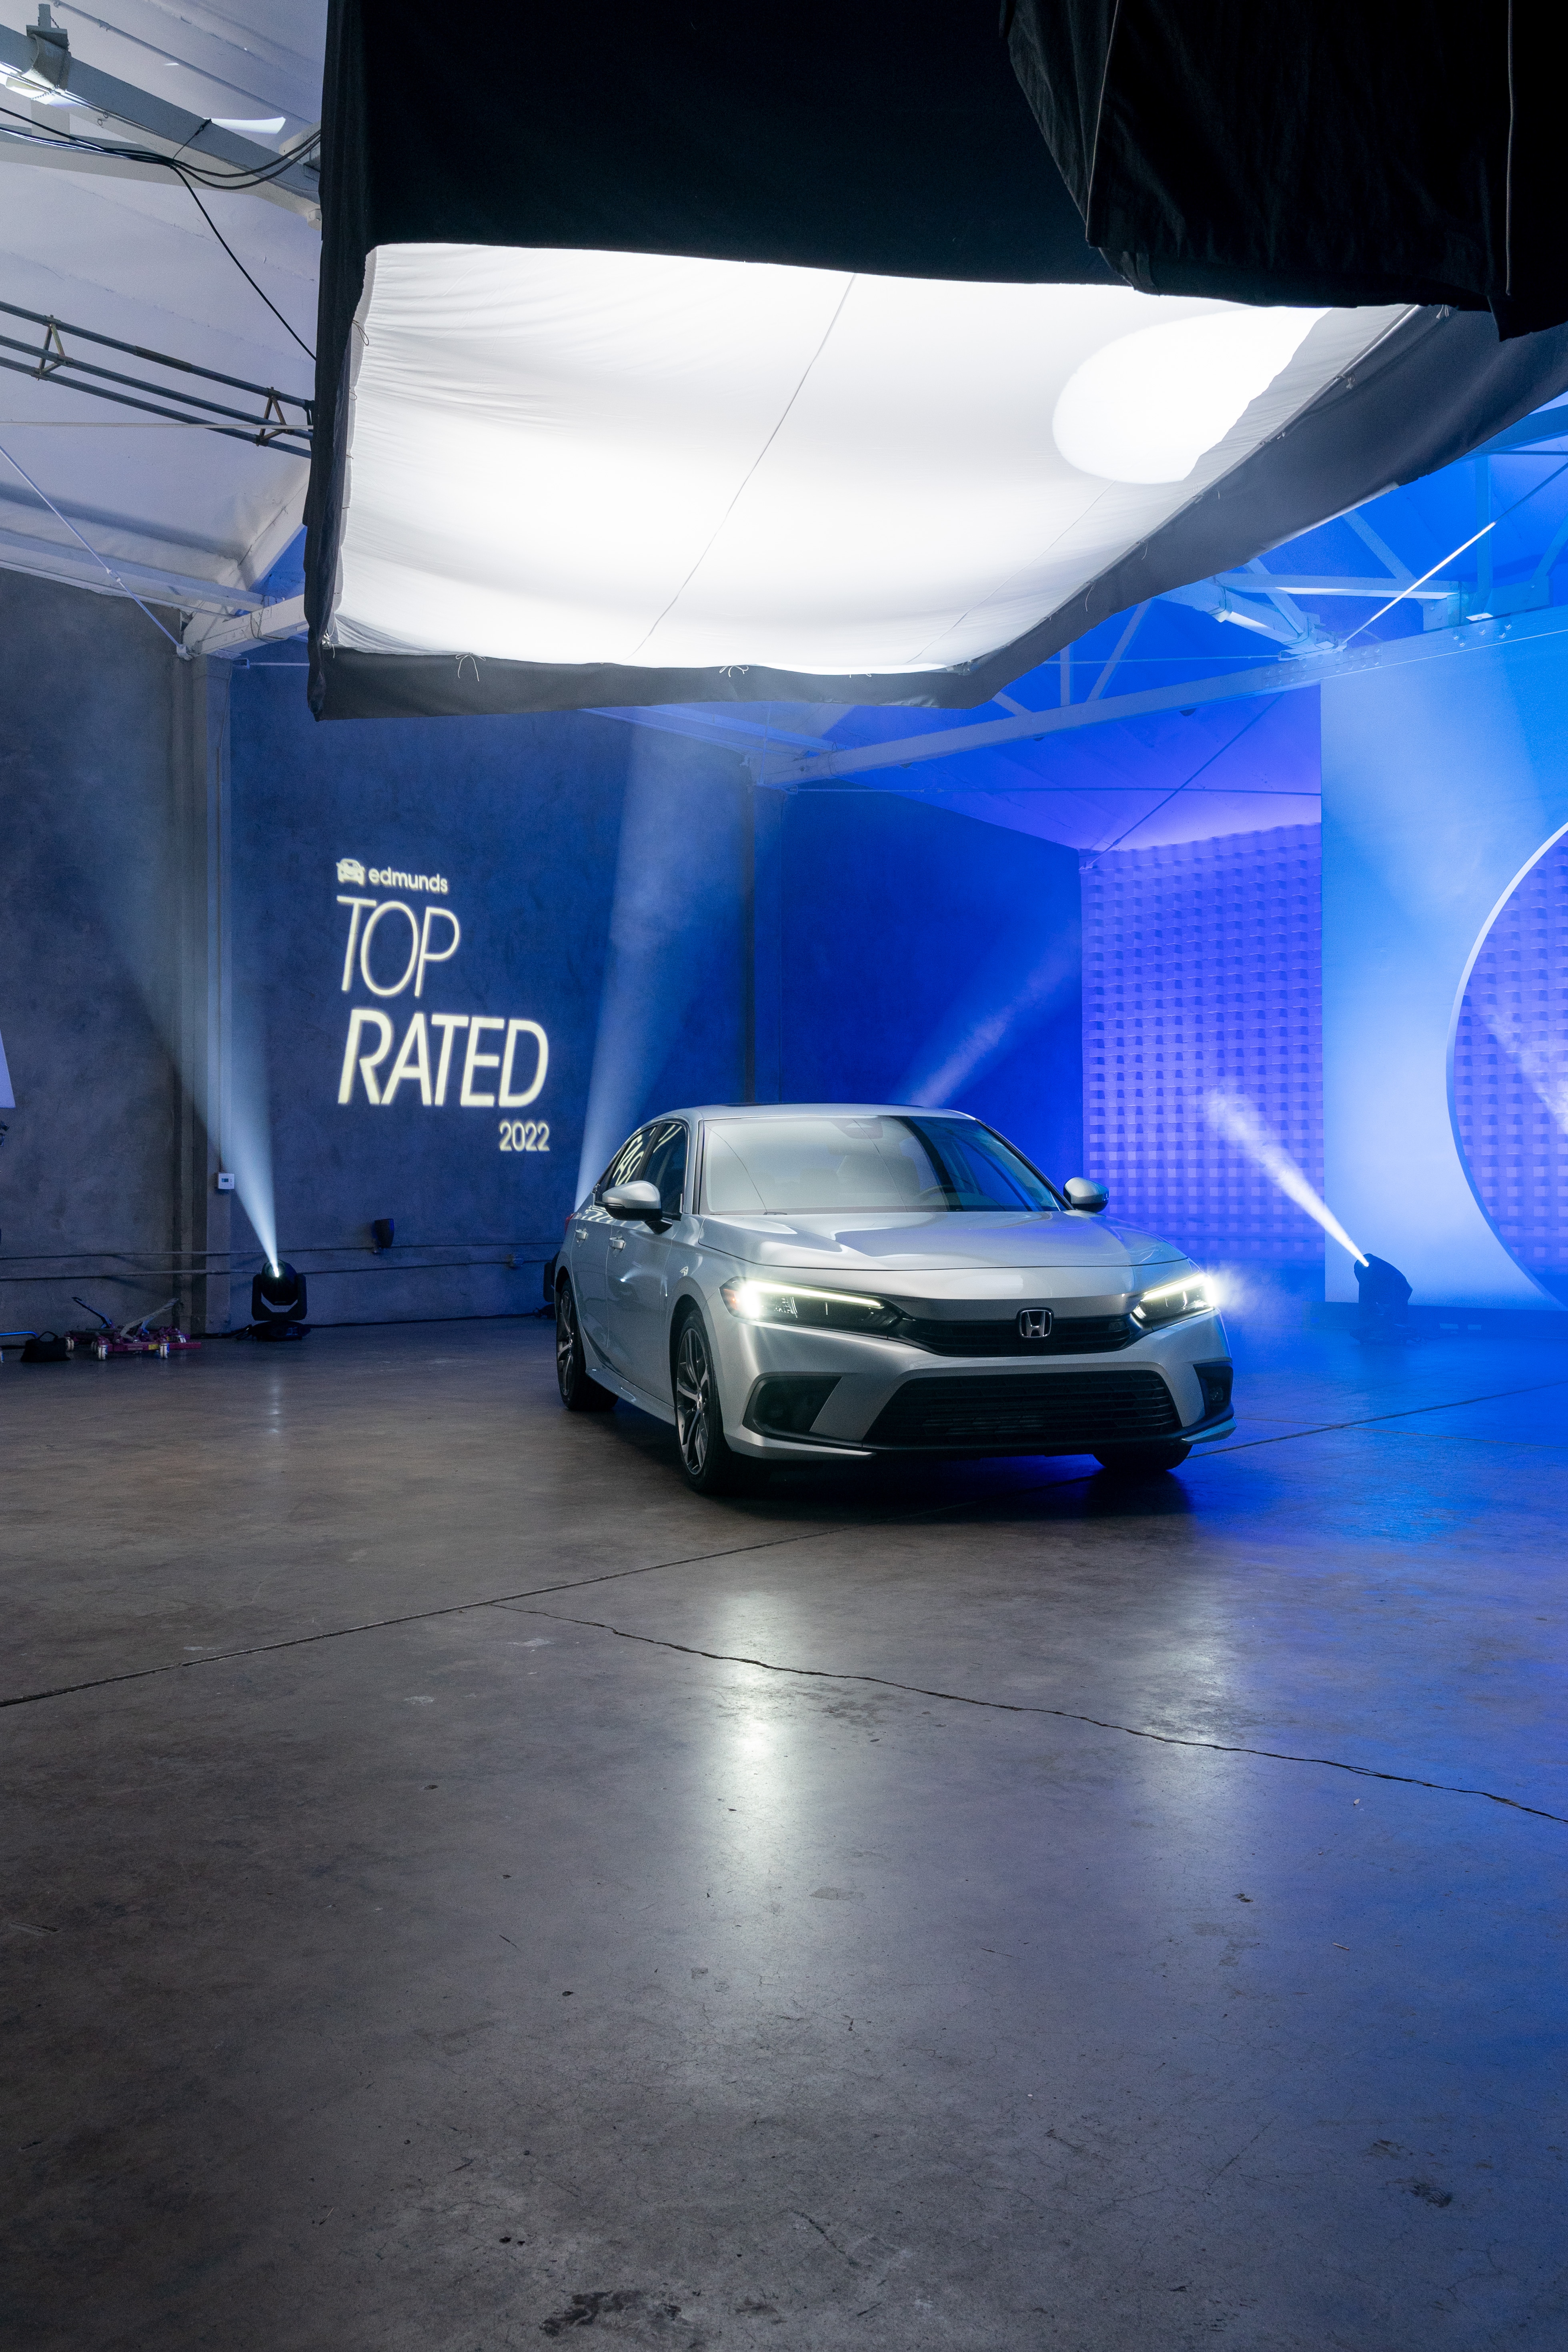 2022 Honda Civic - Edmunds Top Rated Sedan